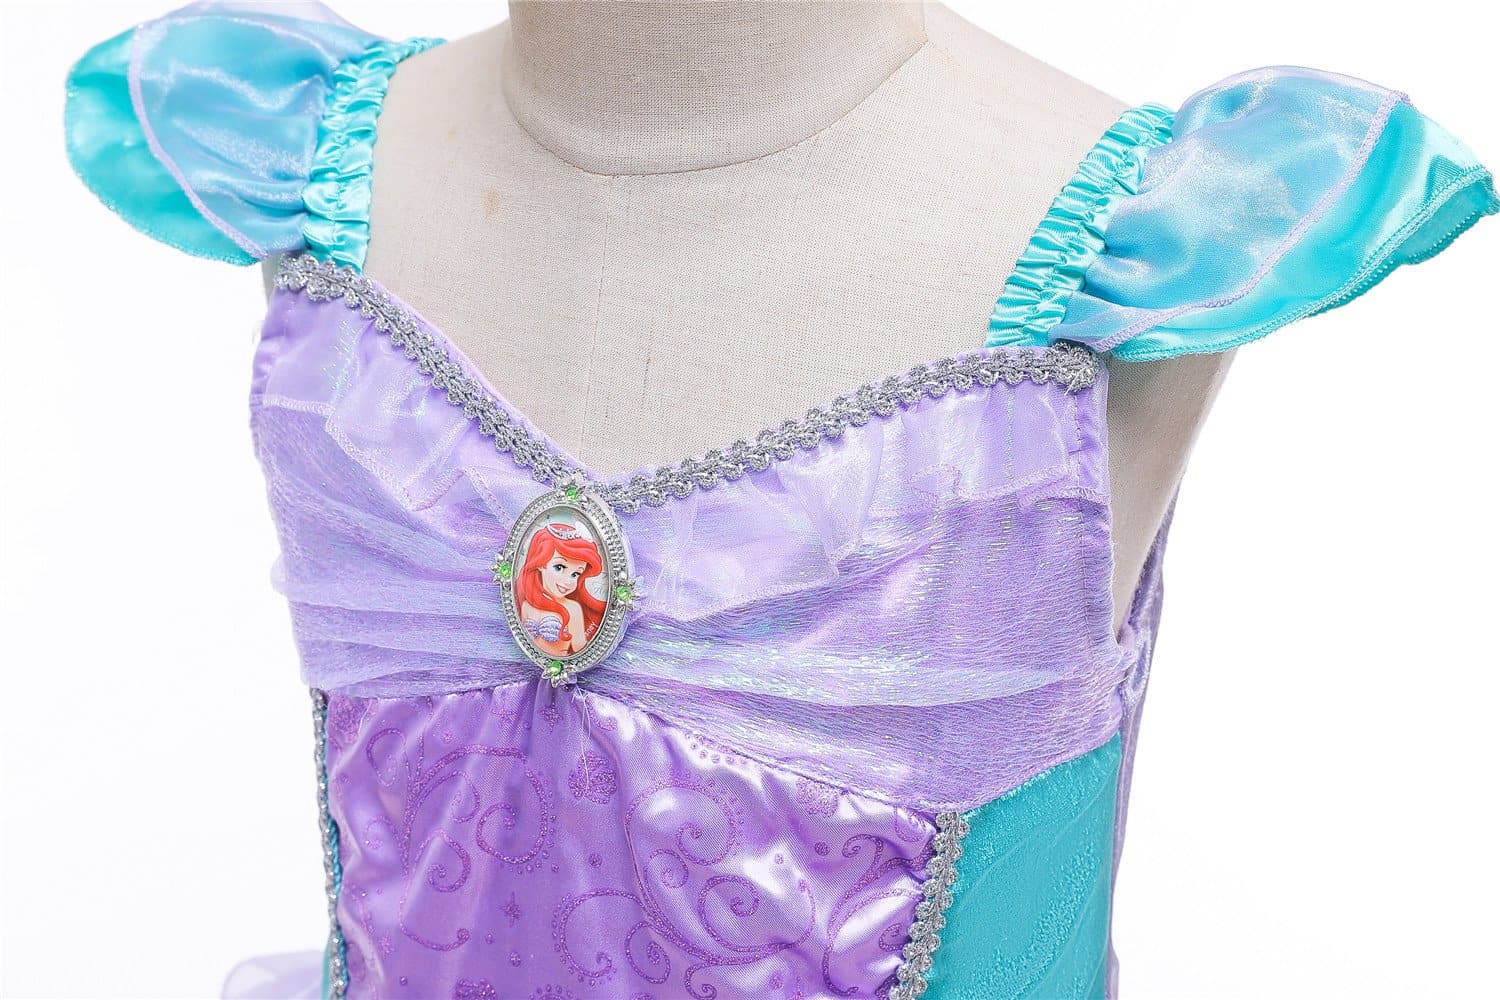 Mermaid Dress Costume for Girls